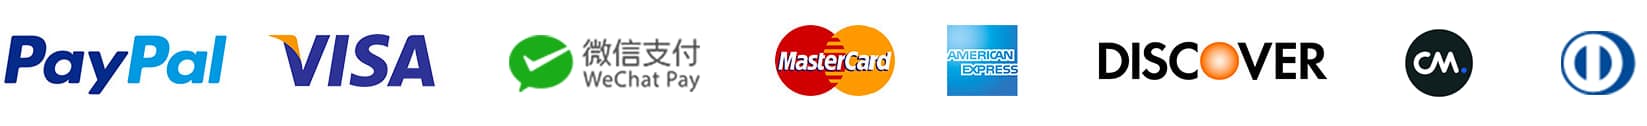 payment methods: 微信支付、PayPal、 Discover、 Visa (含Visa Electron)、 Mastercard、AMEX、 Maestro和Diner's Club